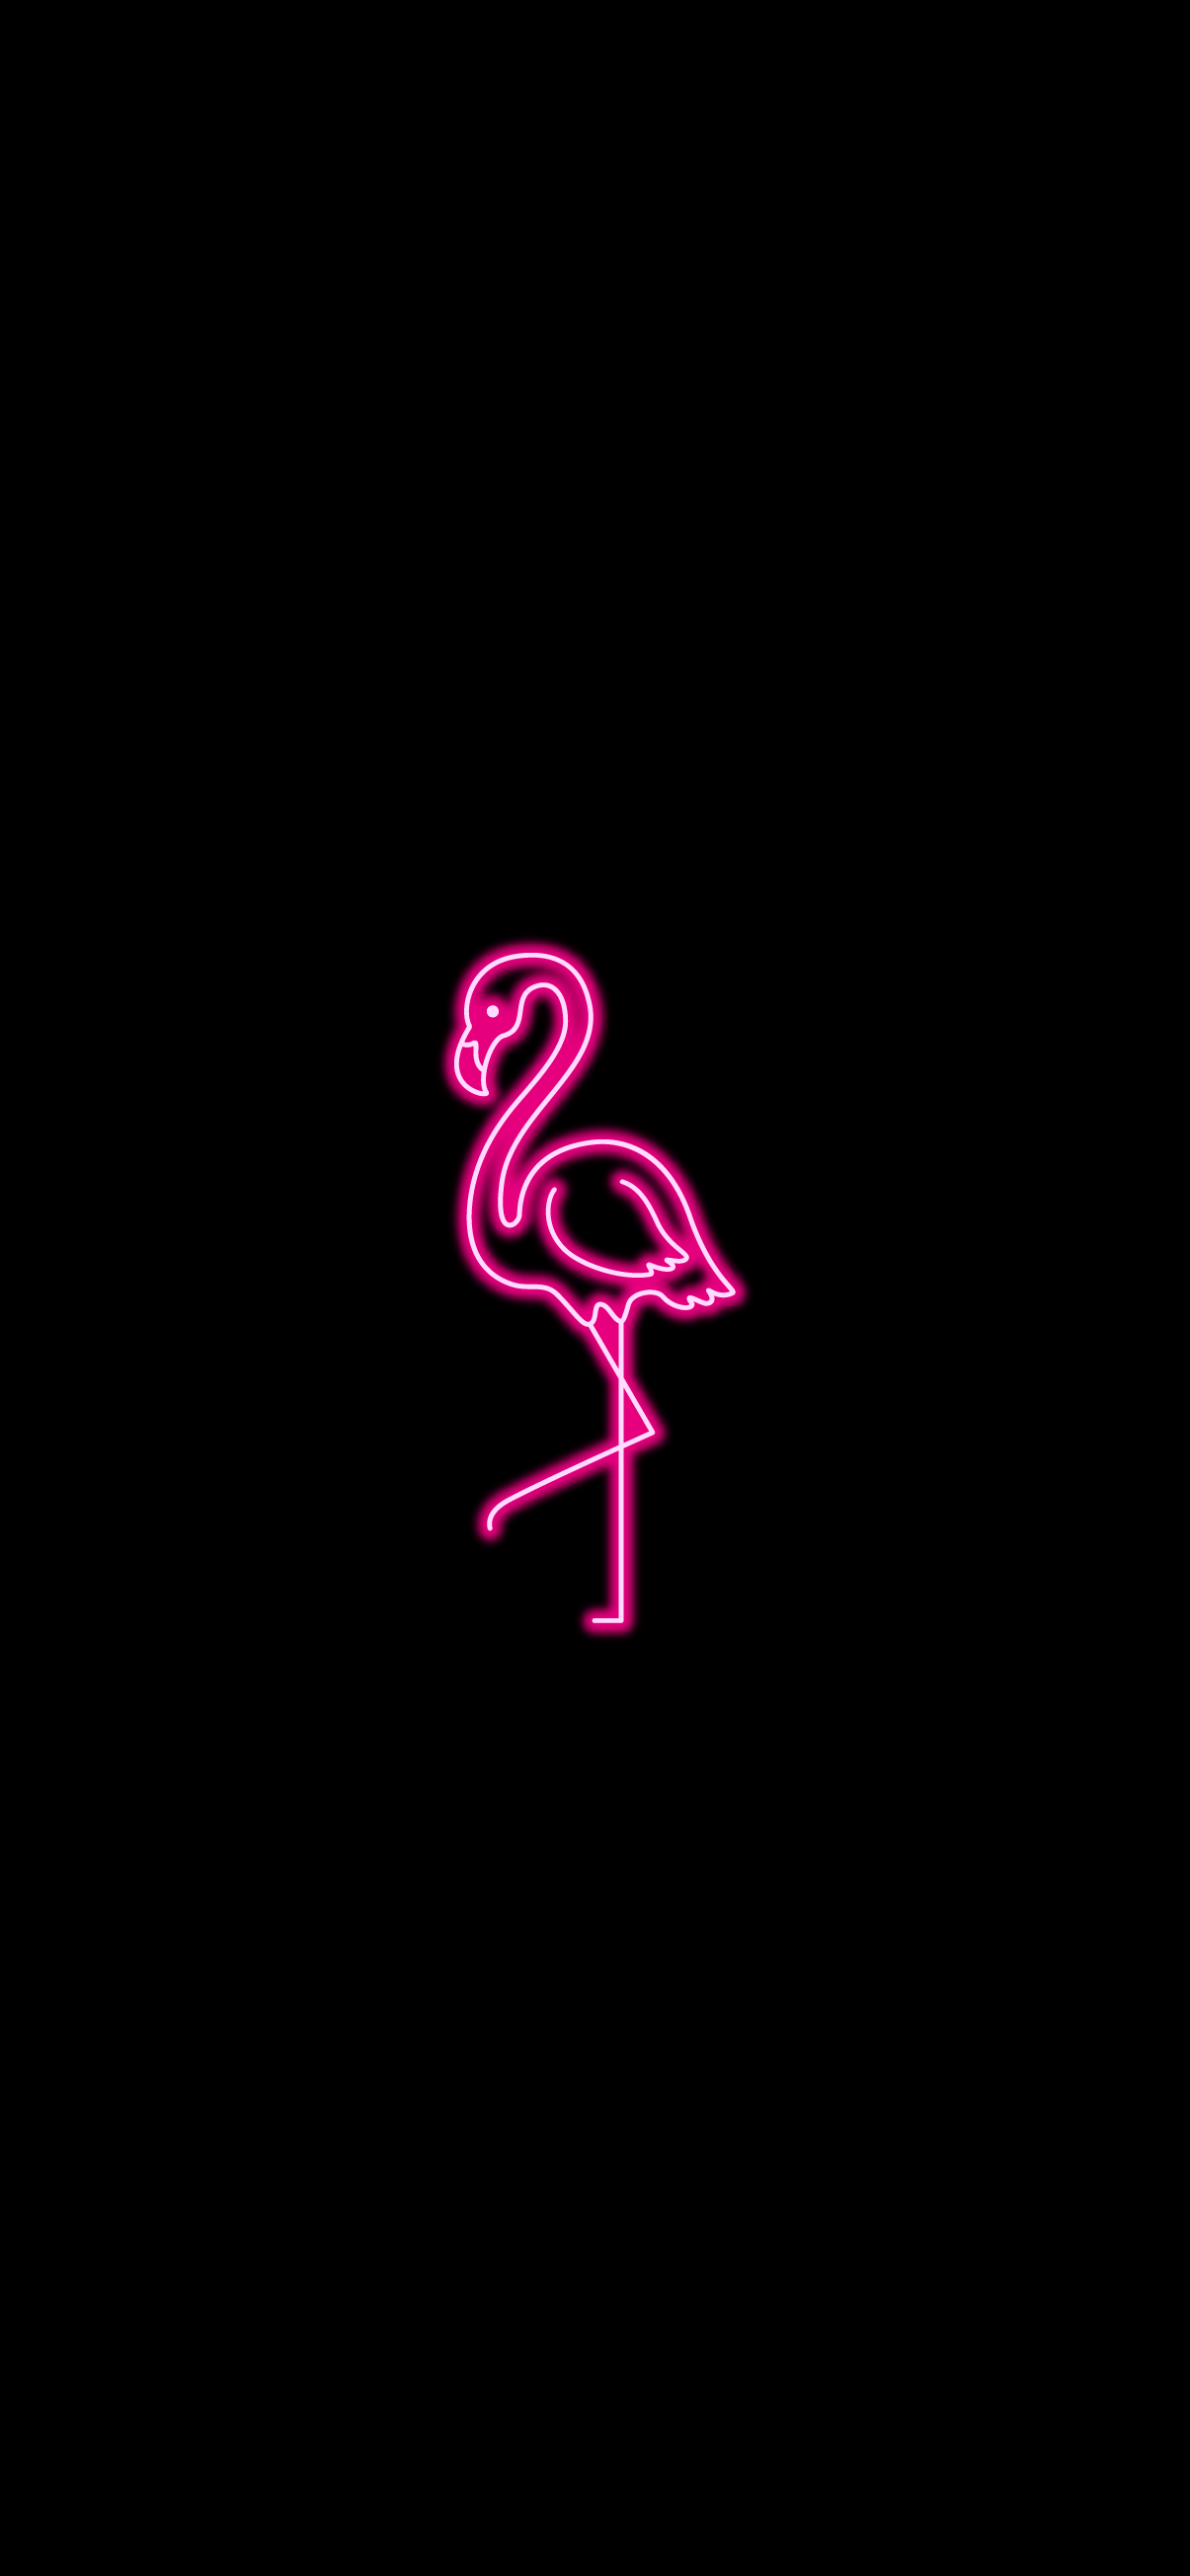 1205x2609 Hình nền Amoled - Flamingo hồng neon.  WallpaperiZe